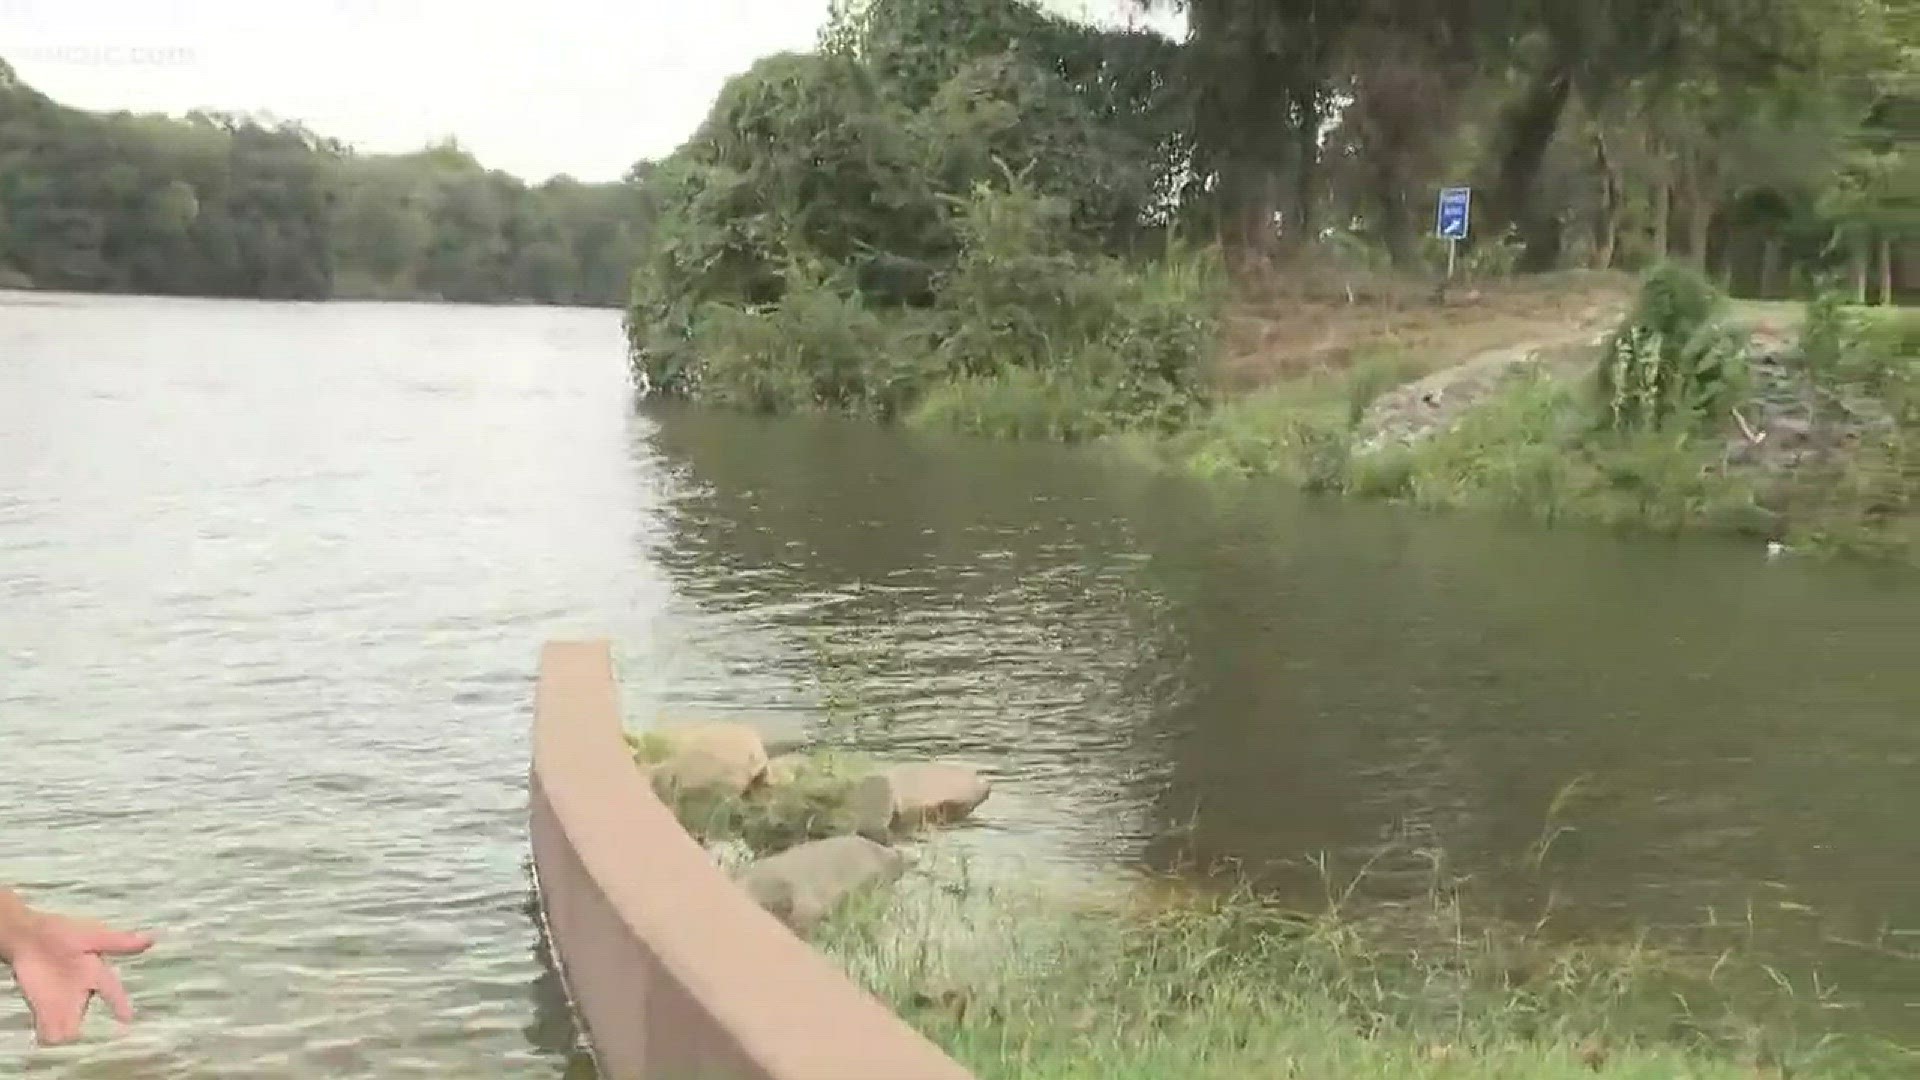 The Catawba River has already begun to swell ahead of Hurricane Florence.